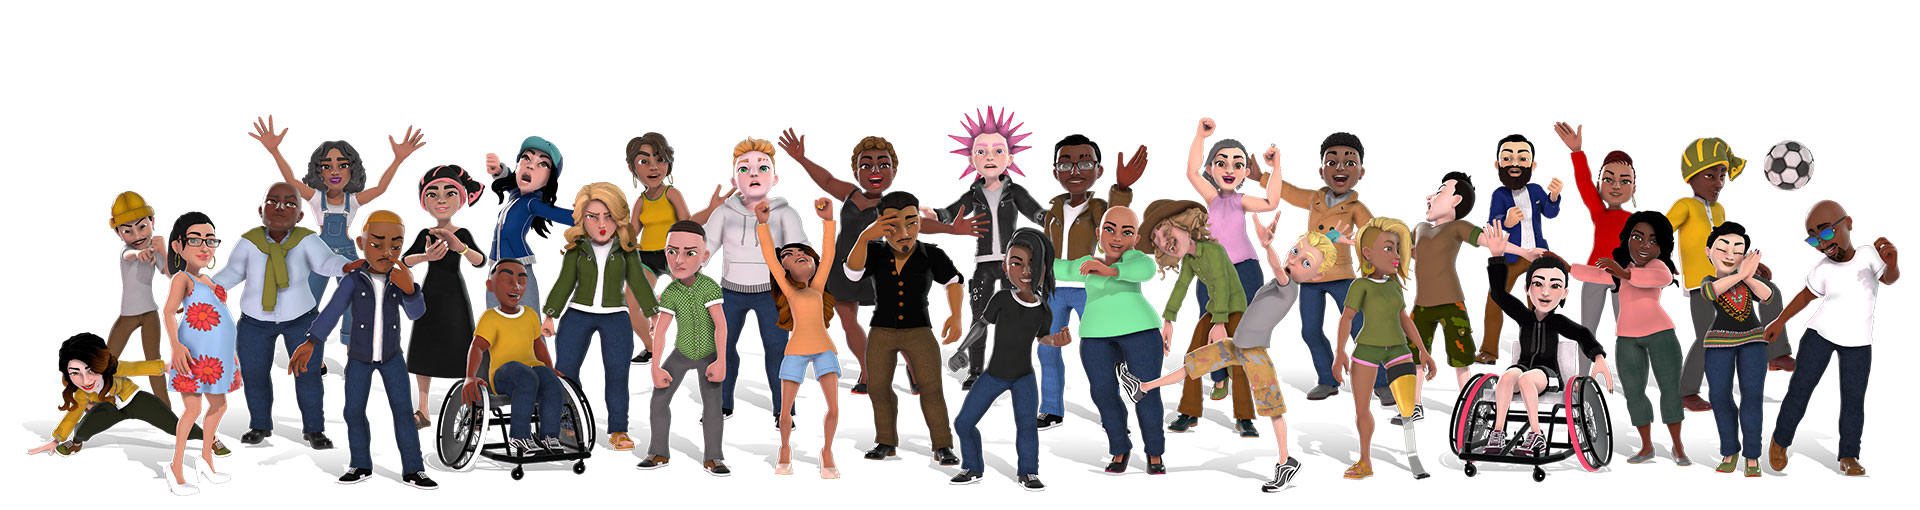 Avatar του Xbox που απεικονίζουν μια ομάδα διαφόρων ανθρώπων με διαφορετικές αμφιέσεις